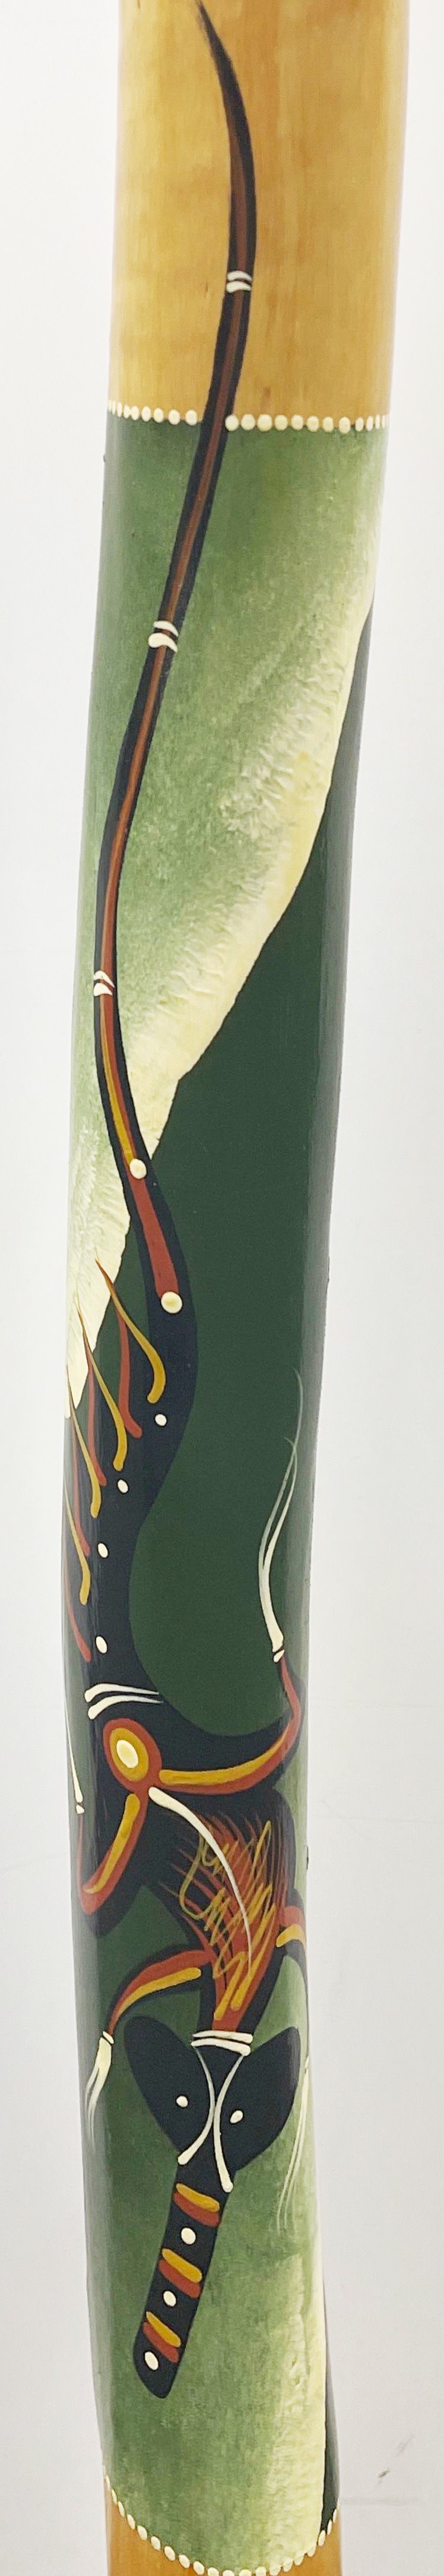 A hand painted aboriginal didgeridoo. - Image 3 of 3